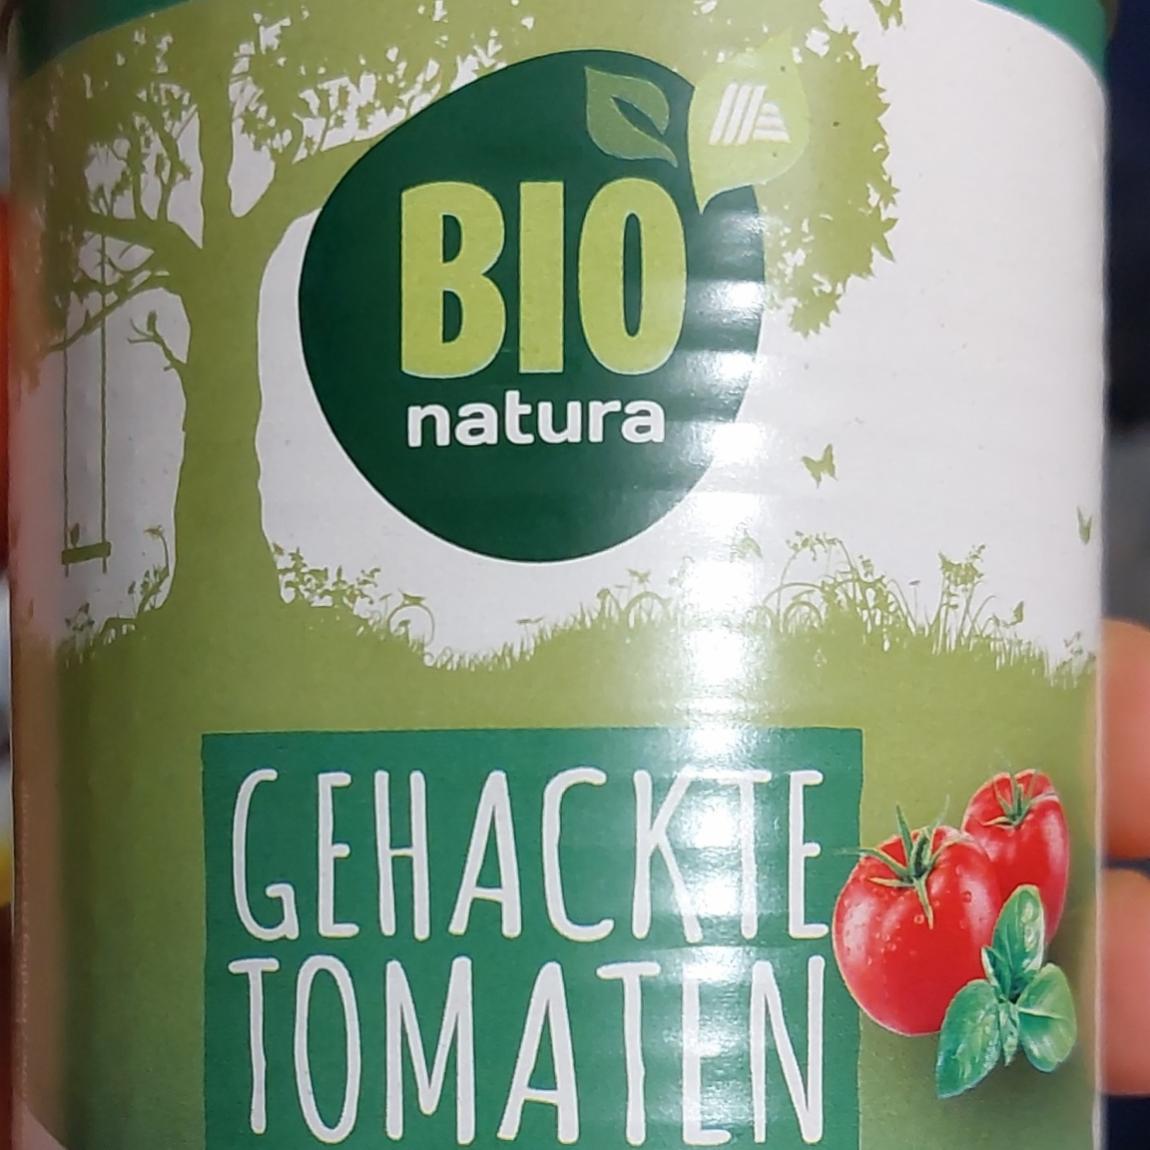 Fotografie - Gehackte tomaten basilikum Bio natura